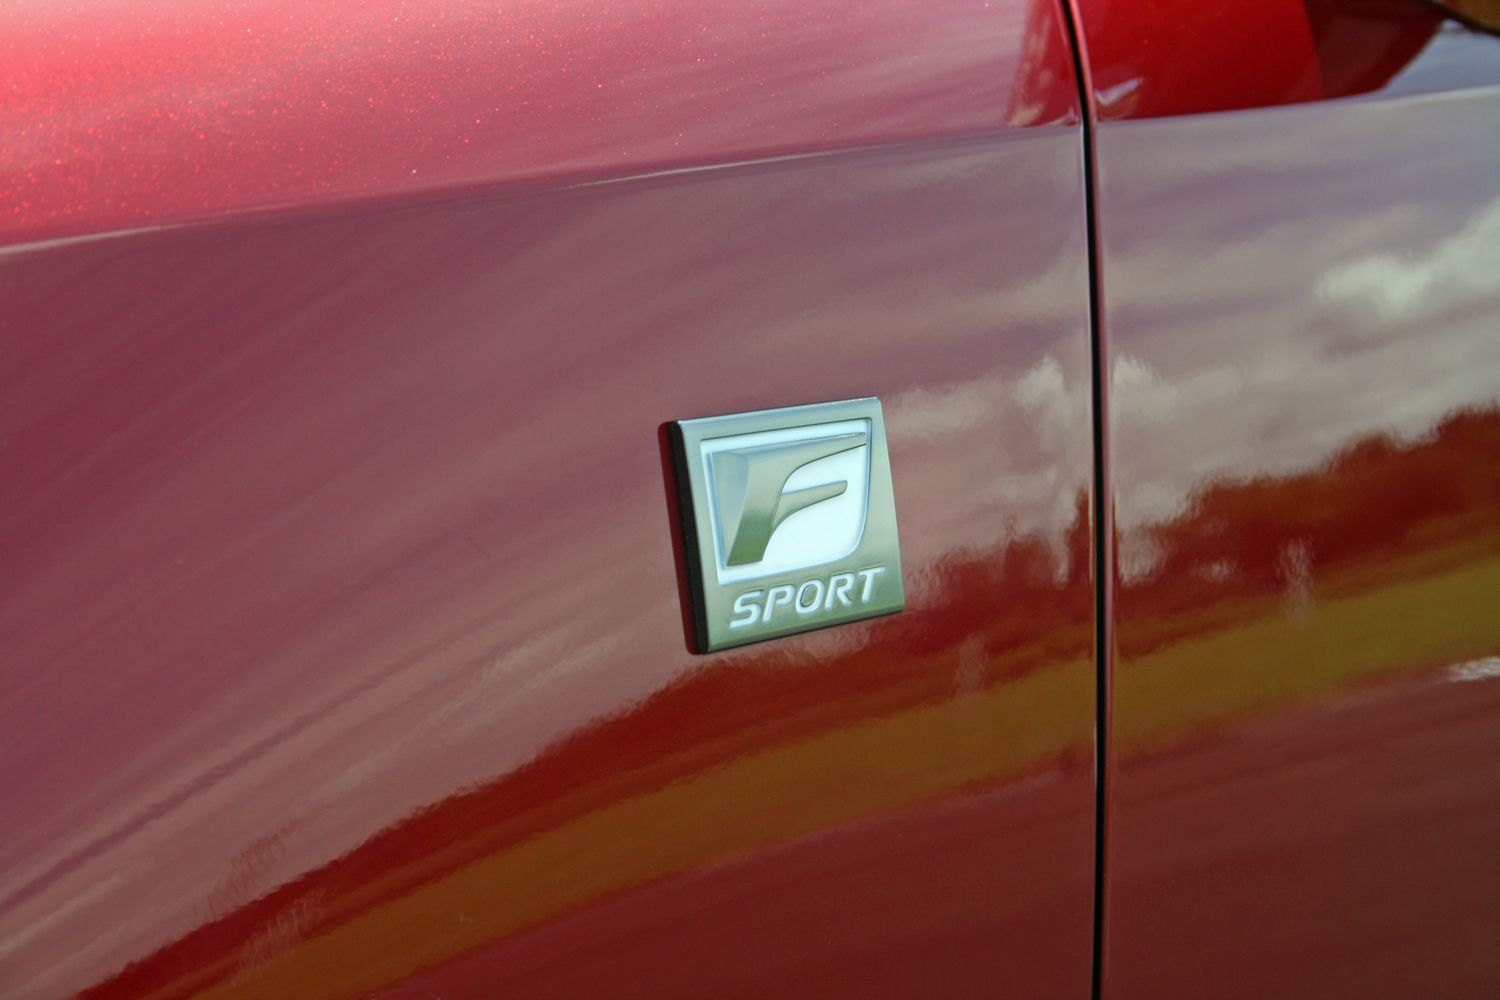 2014 Lexus IS 350C F Sport - Driven